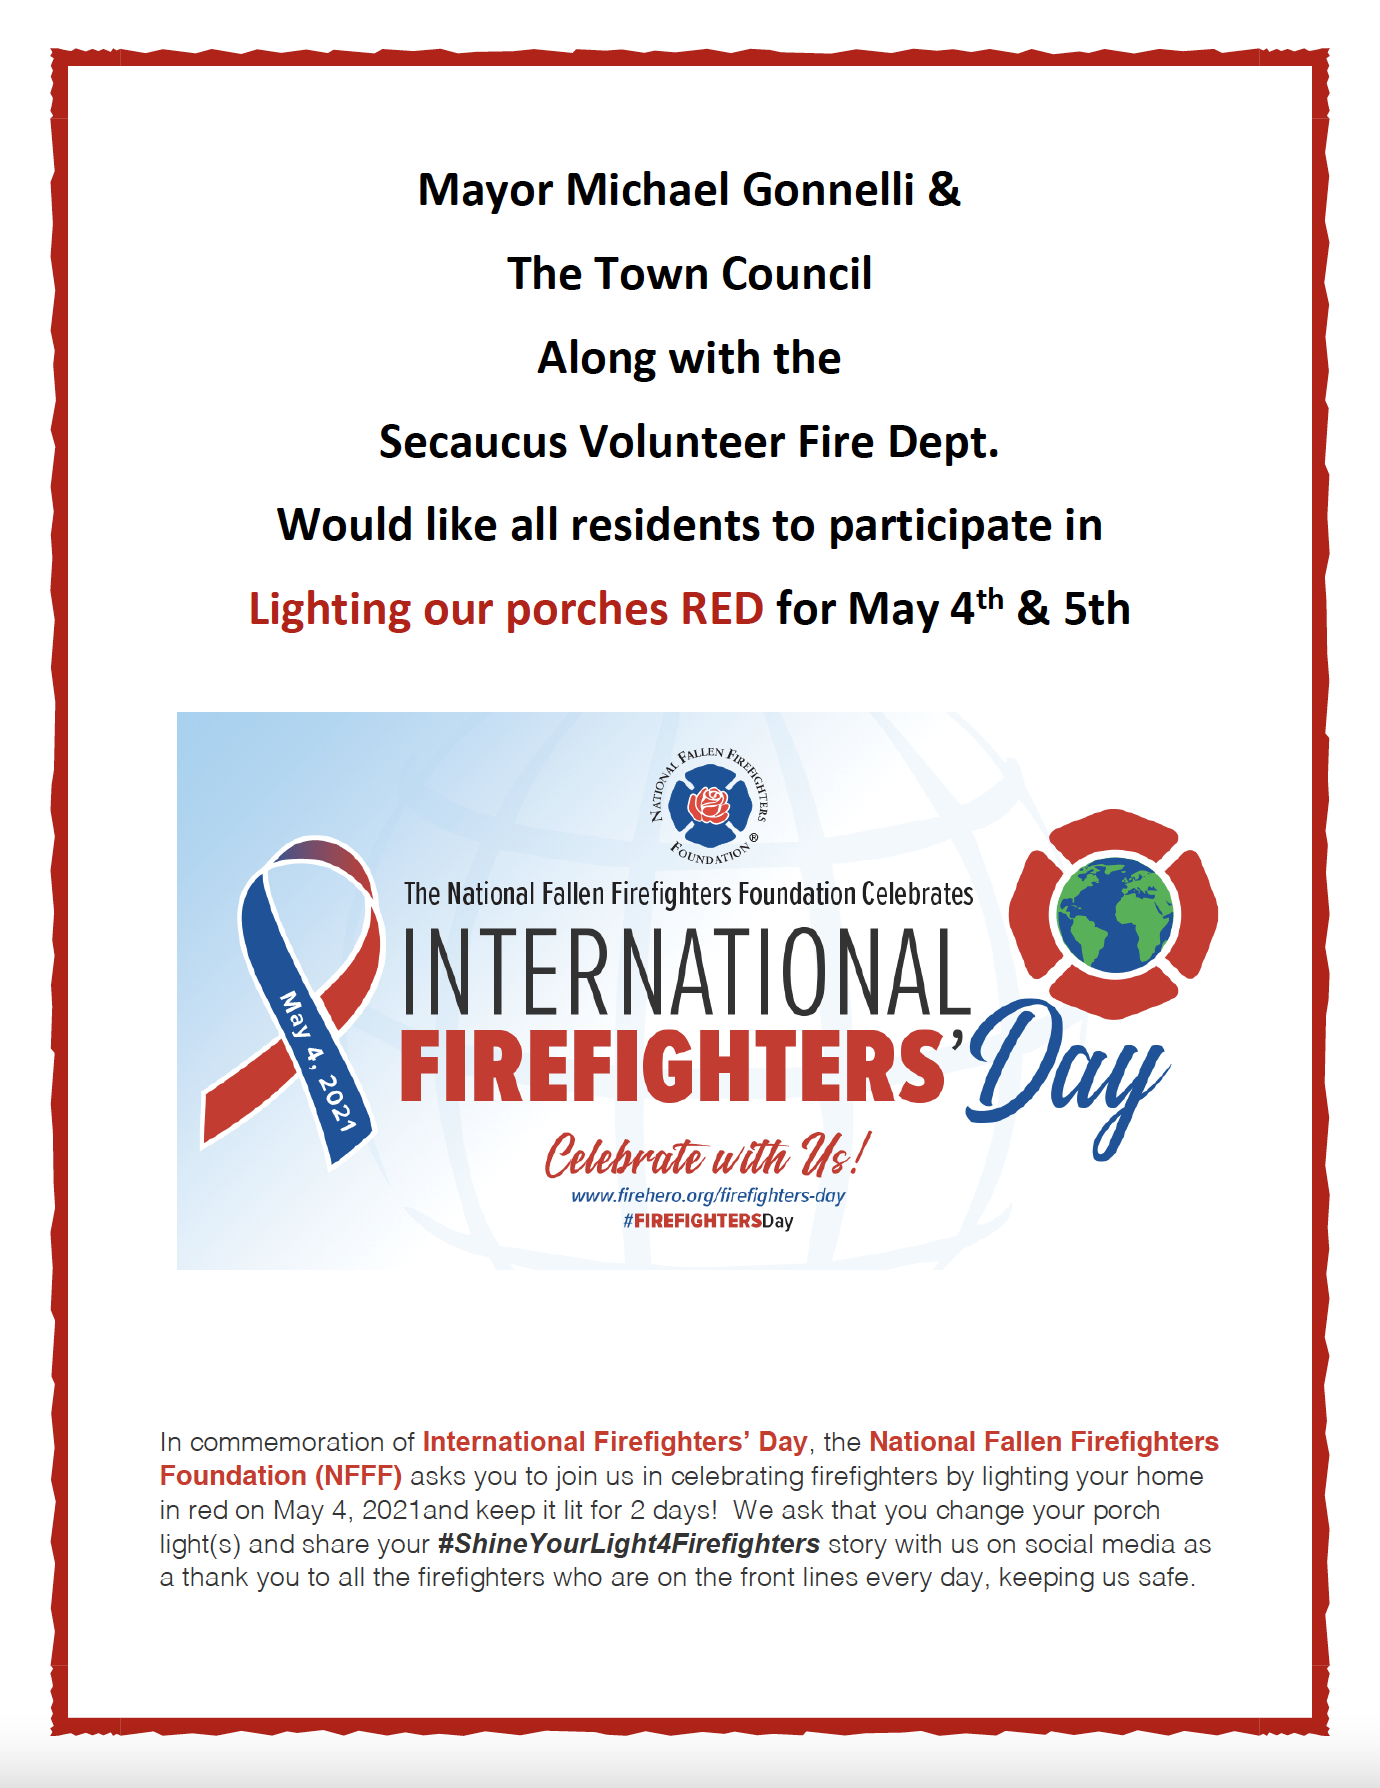 Firefighter's Day Flyer